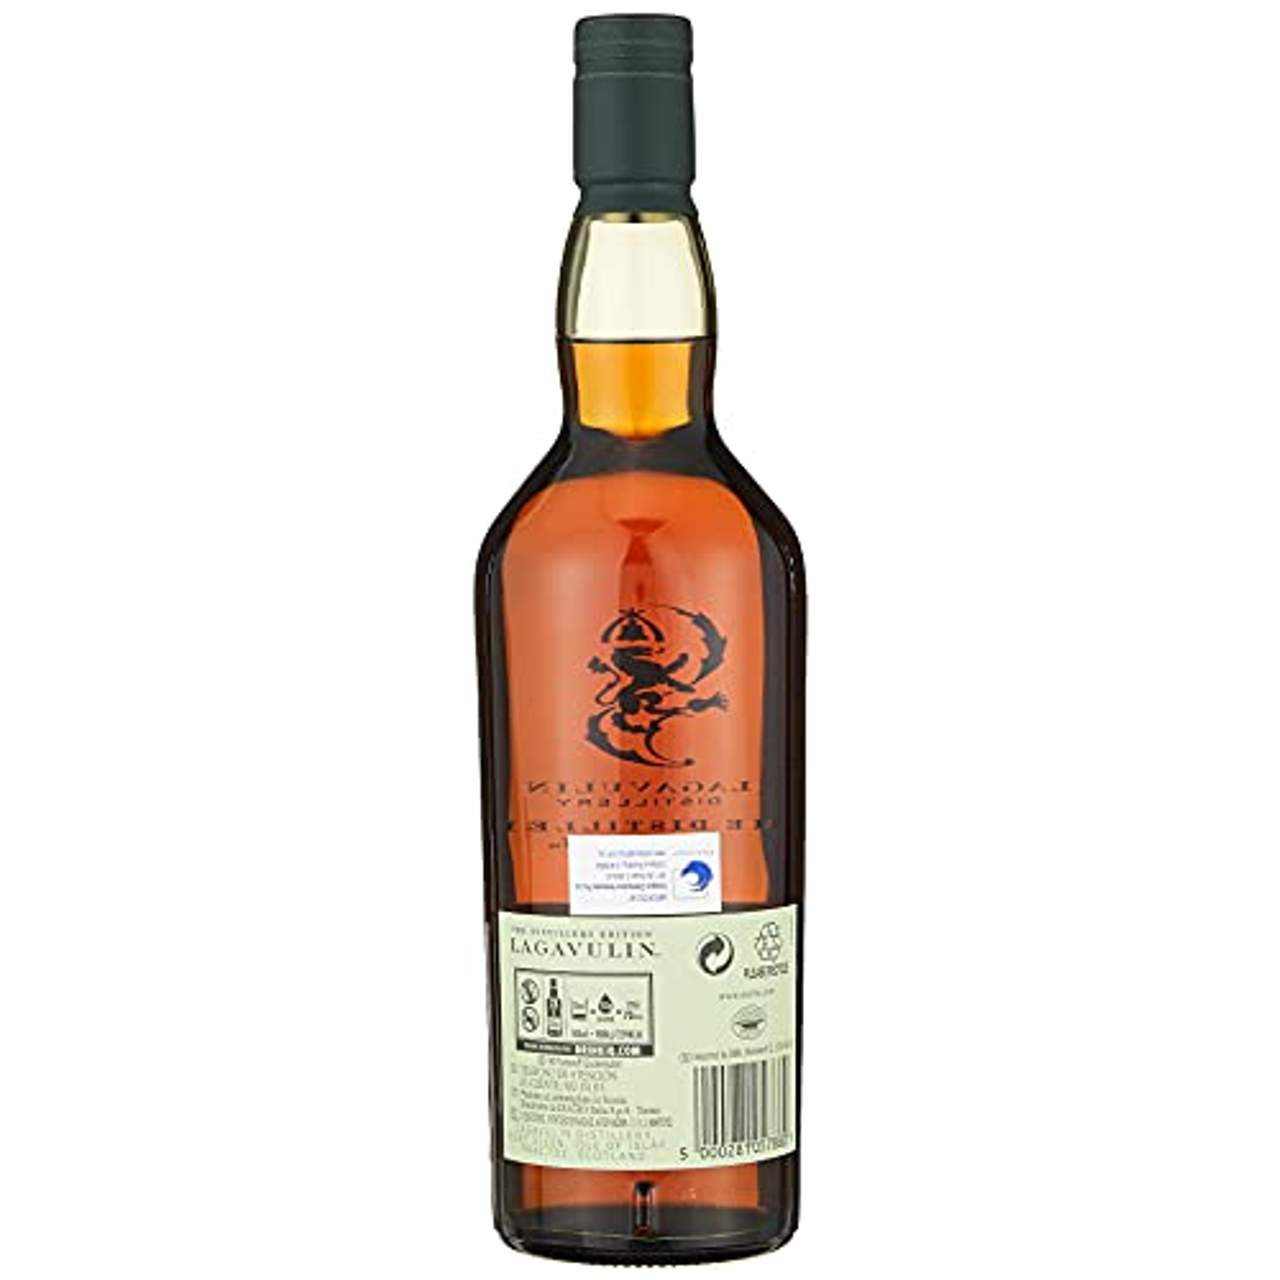 Lagavulin Distillers Edition 2017 Islay Single Malt Scotch Whisky